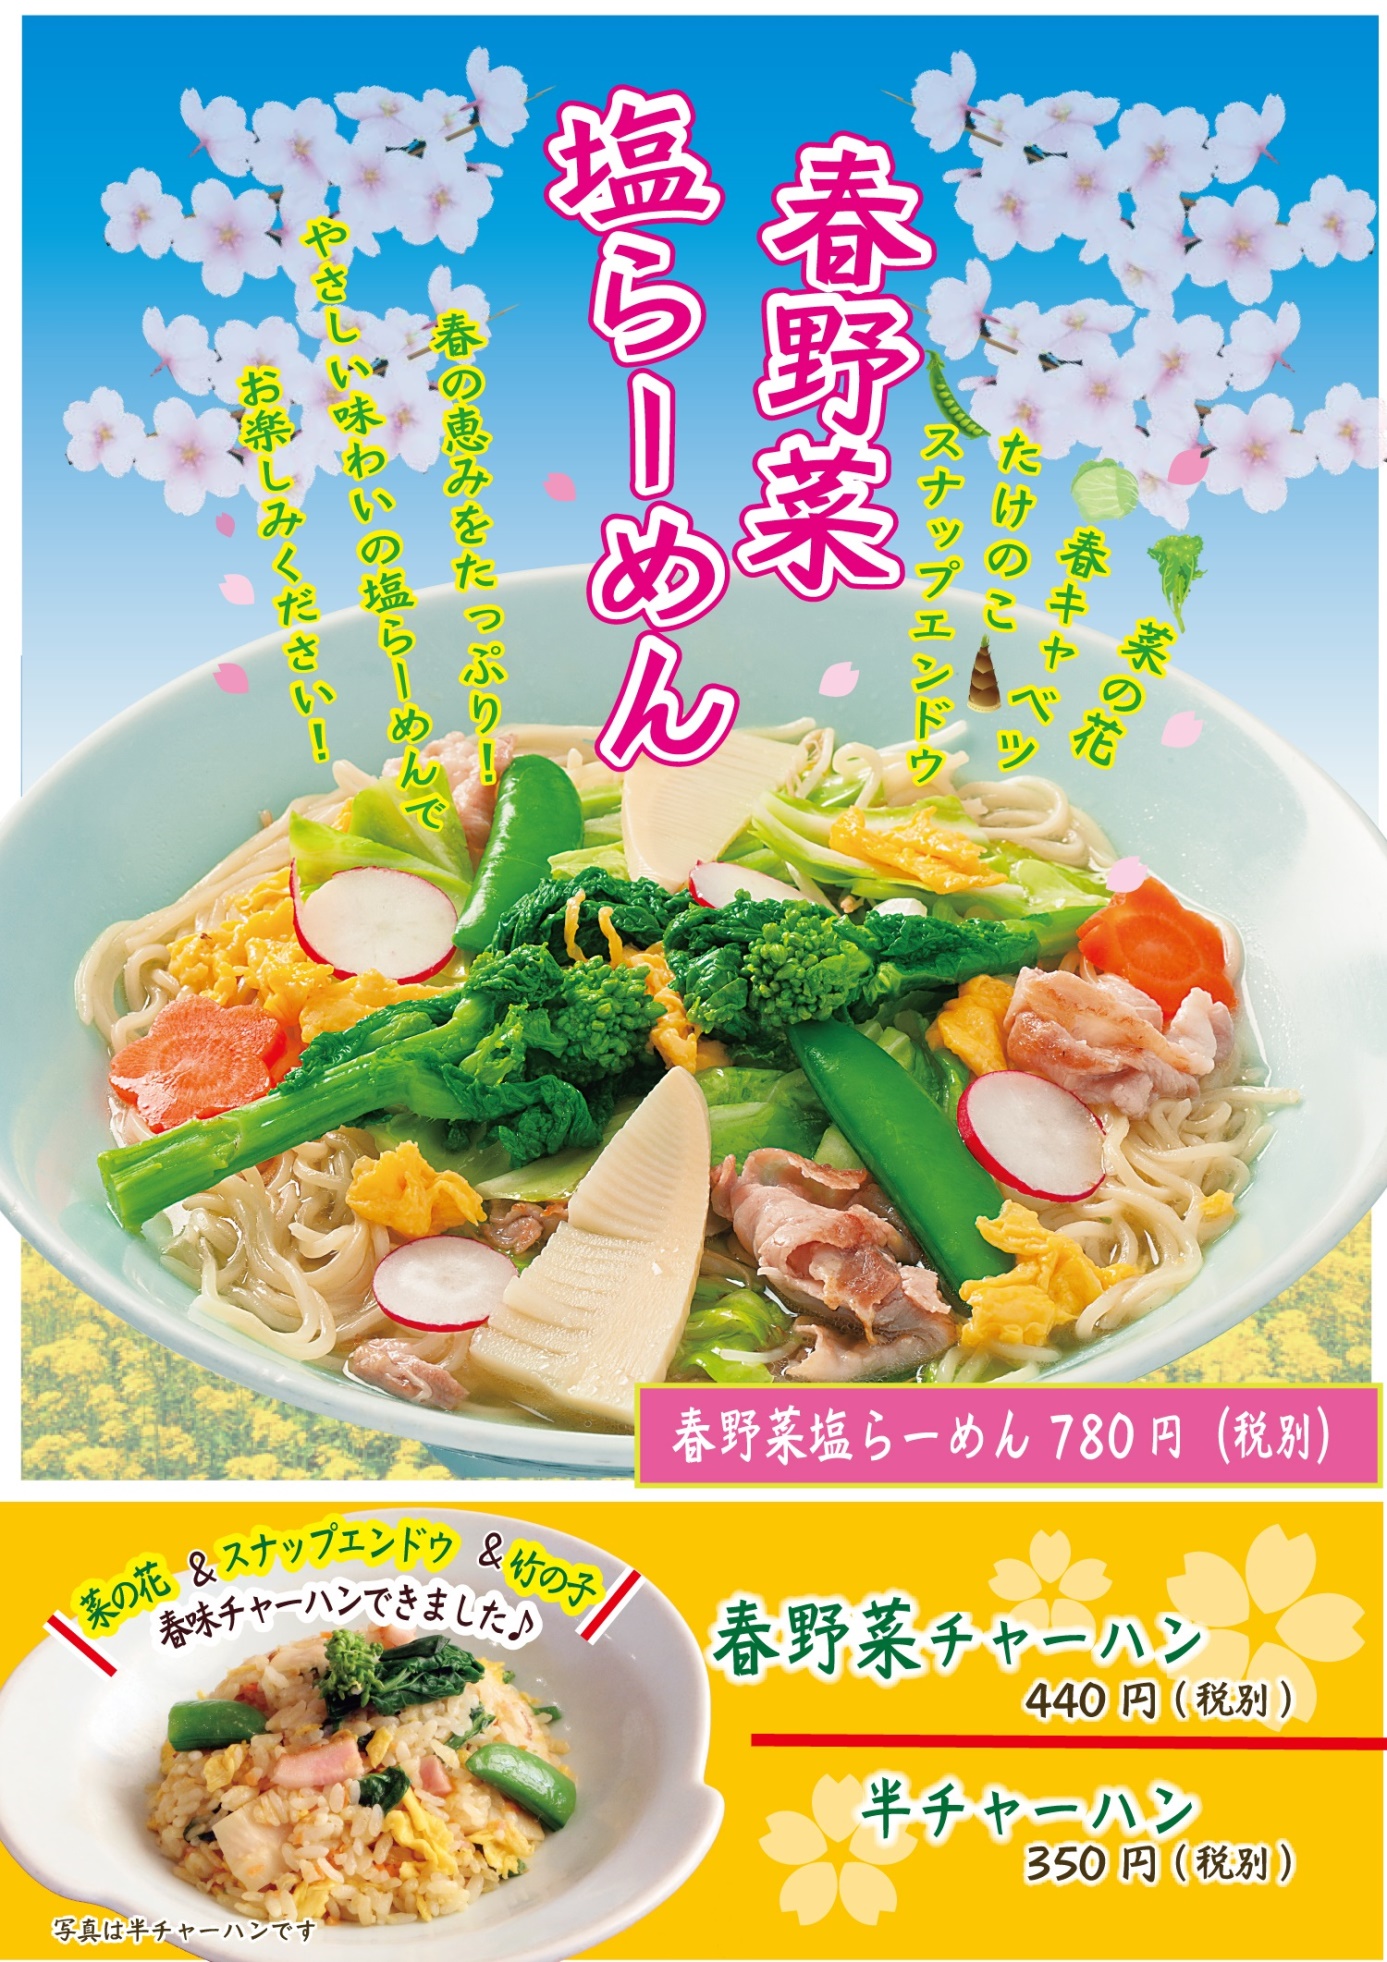 Haru yasai shio ramen 春野菜塩らーめん un ramen avec des légumes de printemps